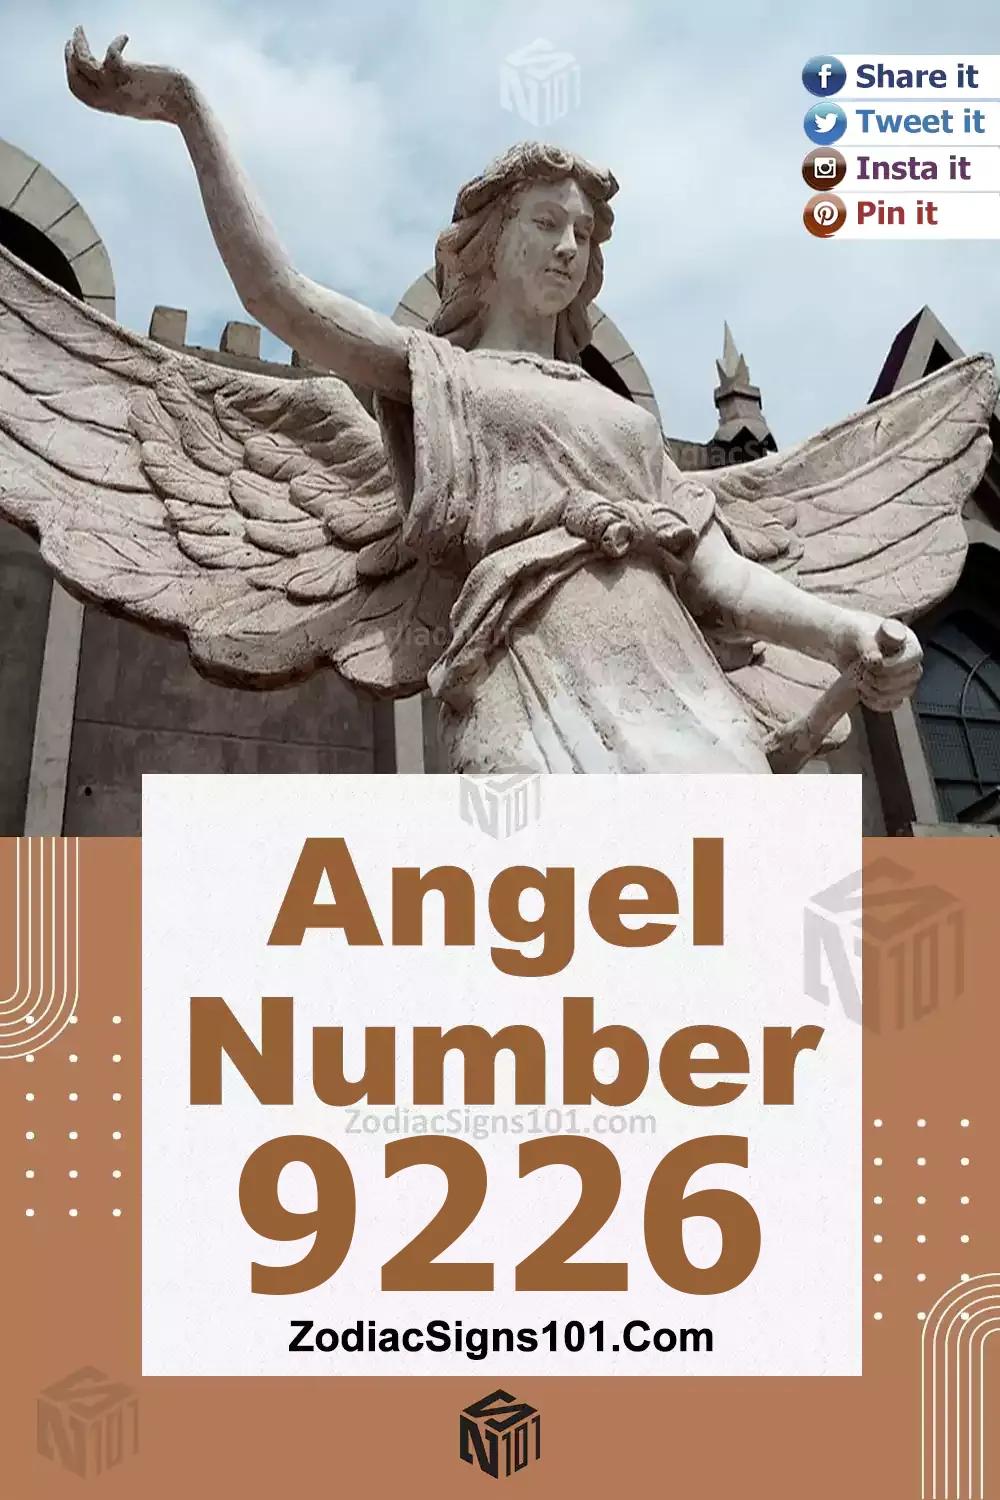 9226-Angel-Number-Meaning.jpg